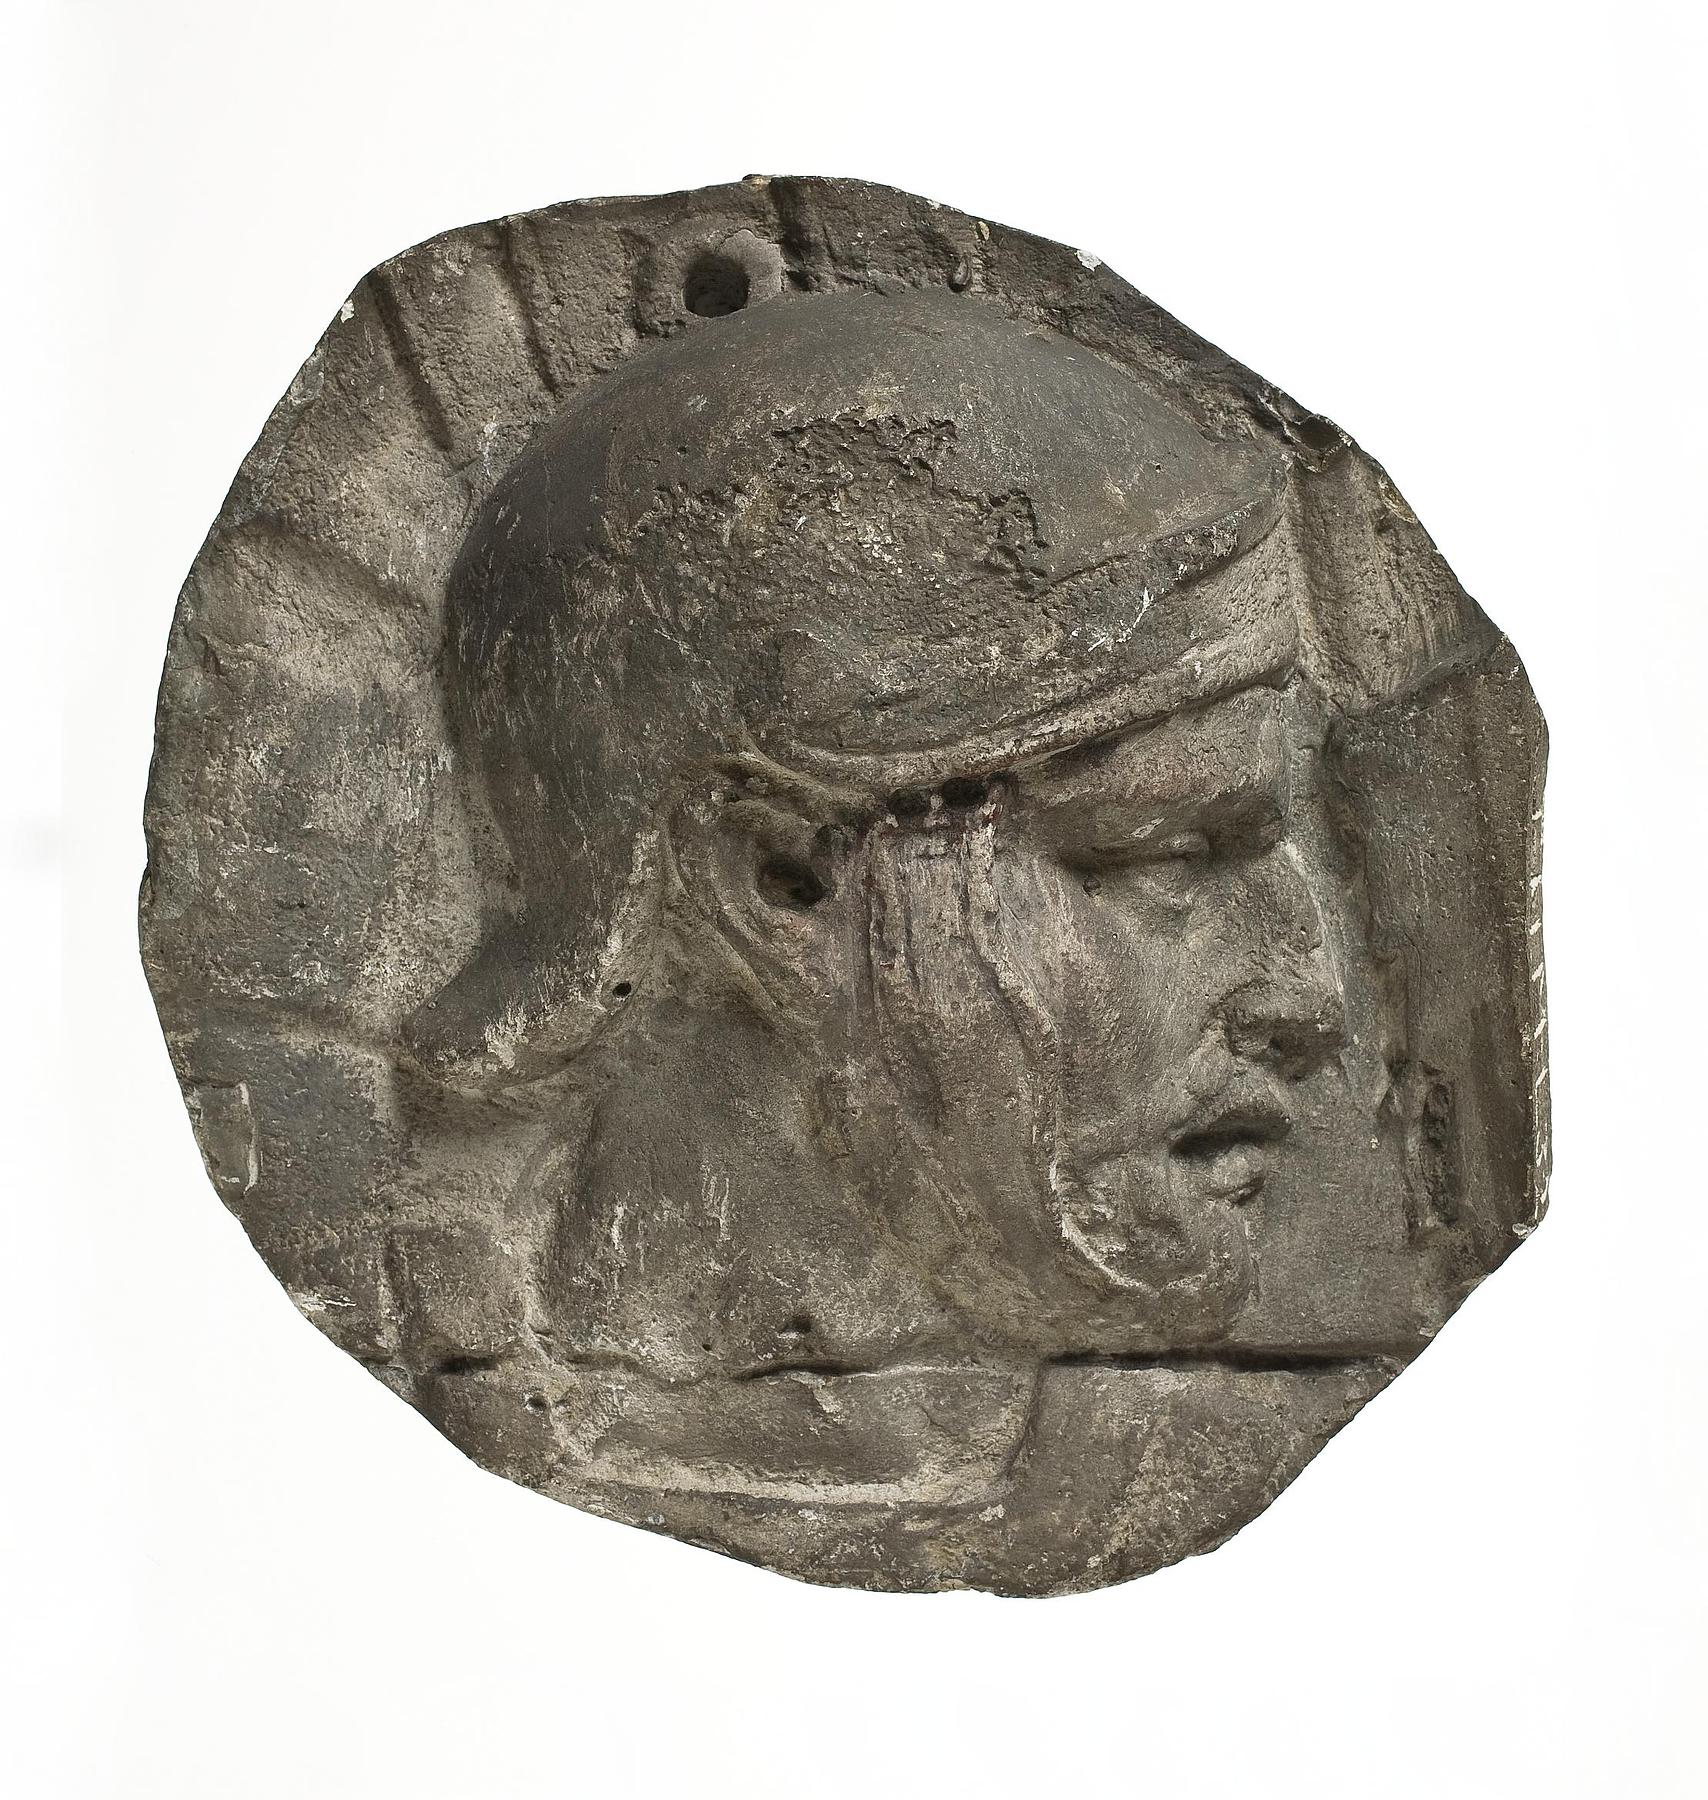 Head of a helmeted legionary, L326v